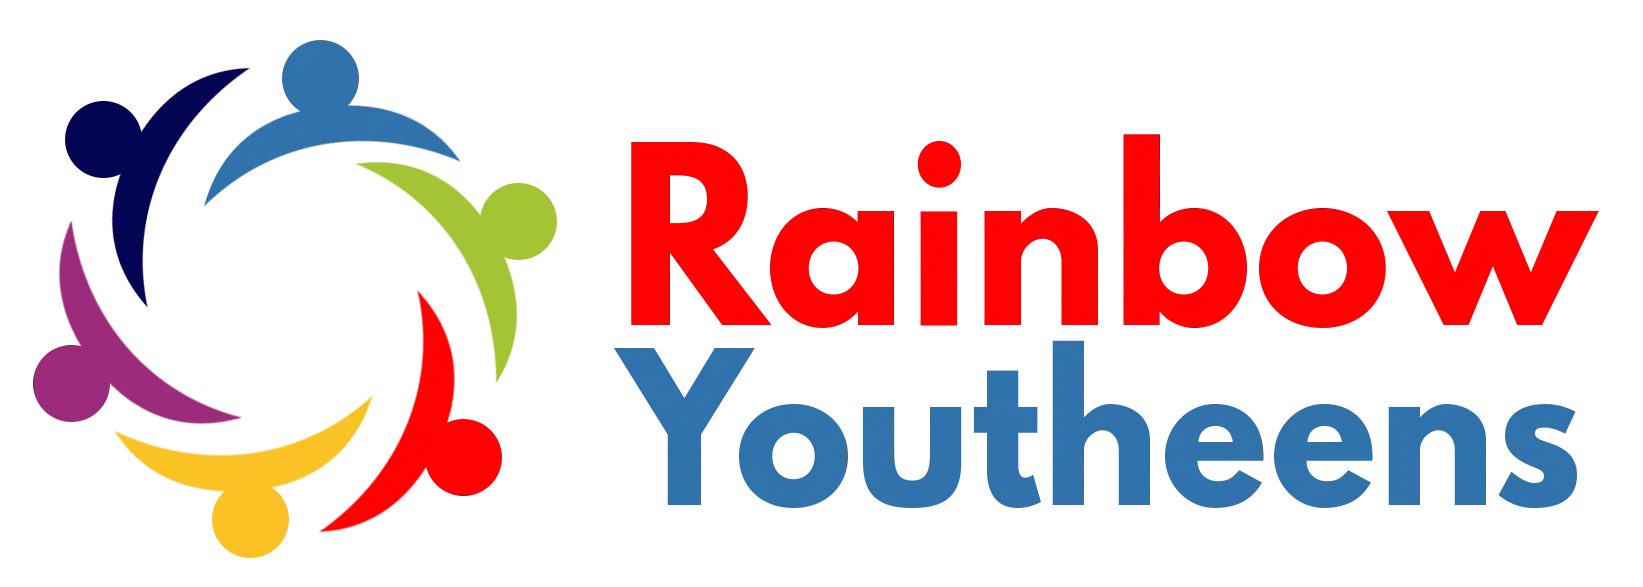 rainbowyoutheens logo